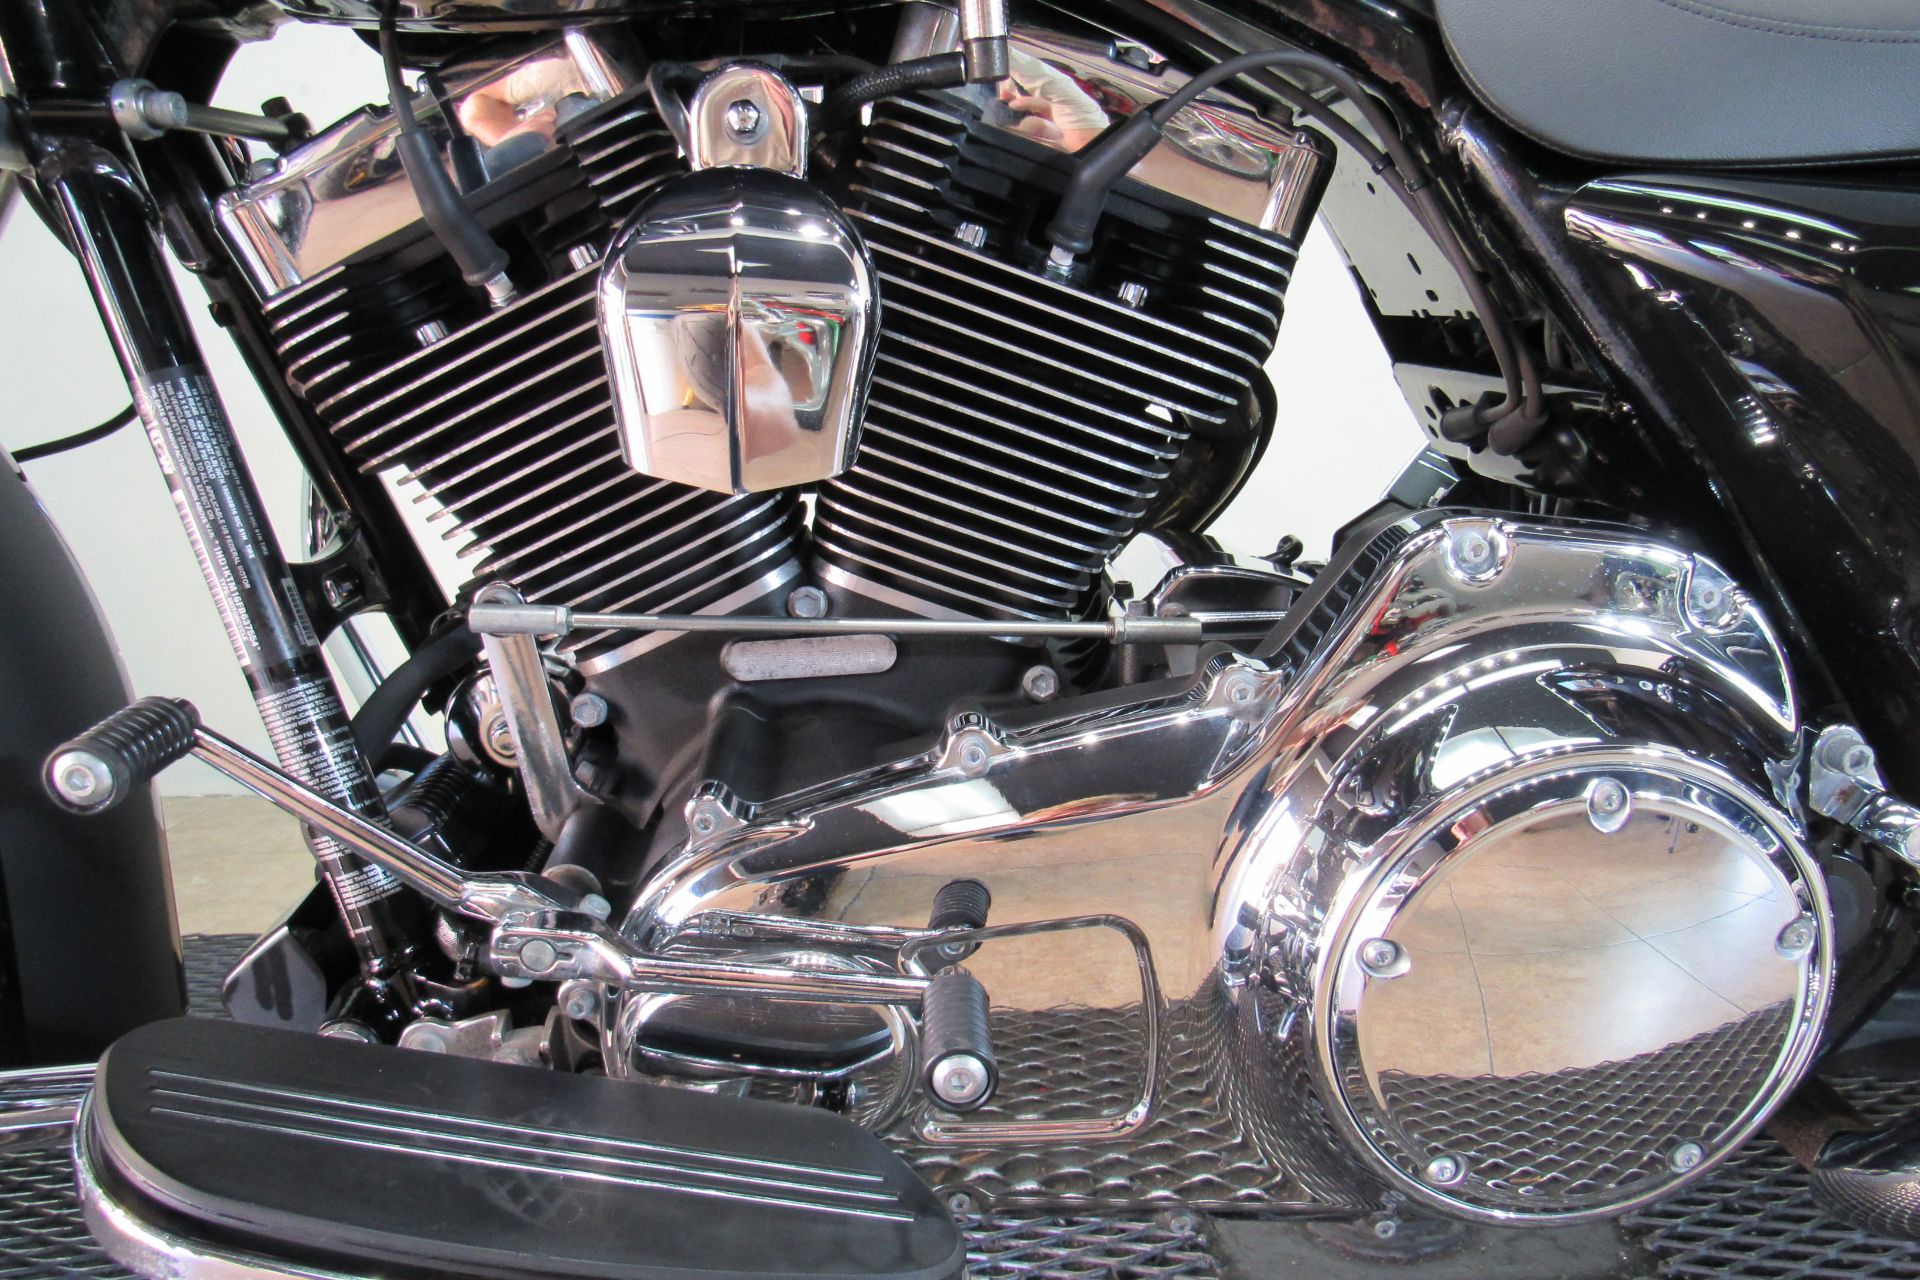 2015 Harley-Davidson Road Glide® Special in Temecula, California - Photo 12